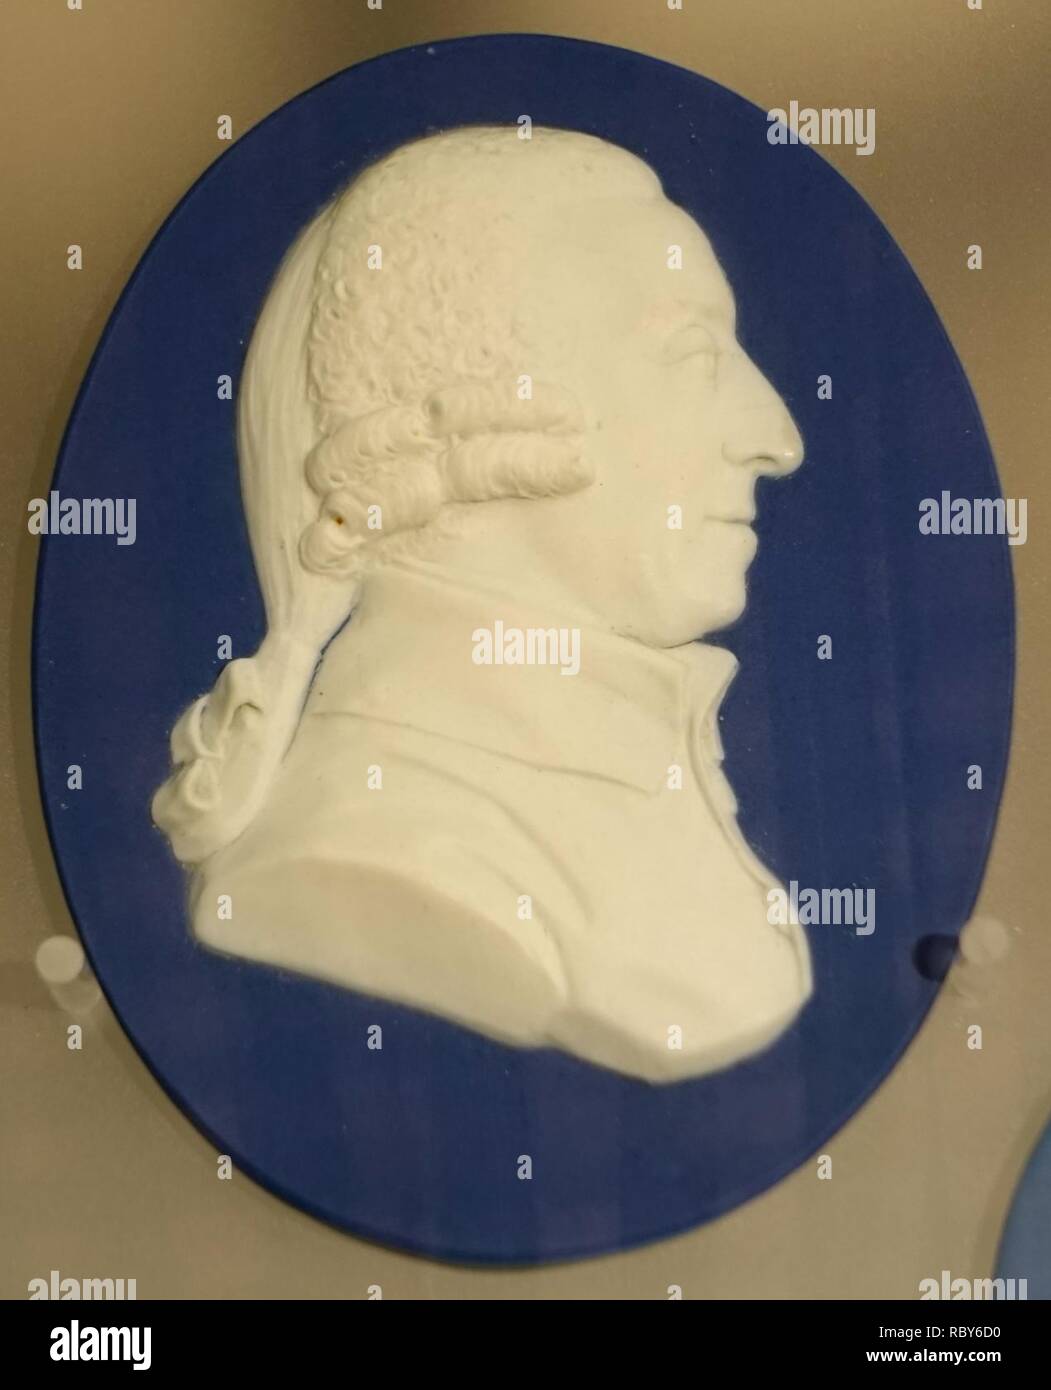 Adam Smith, 1787 - Wedgwood Museum - Barlaston, Stoke-on-Trent, England - DSC09700. Stock Photo